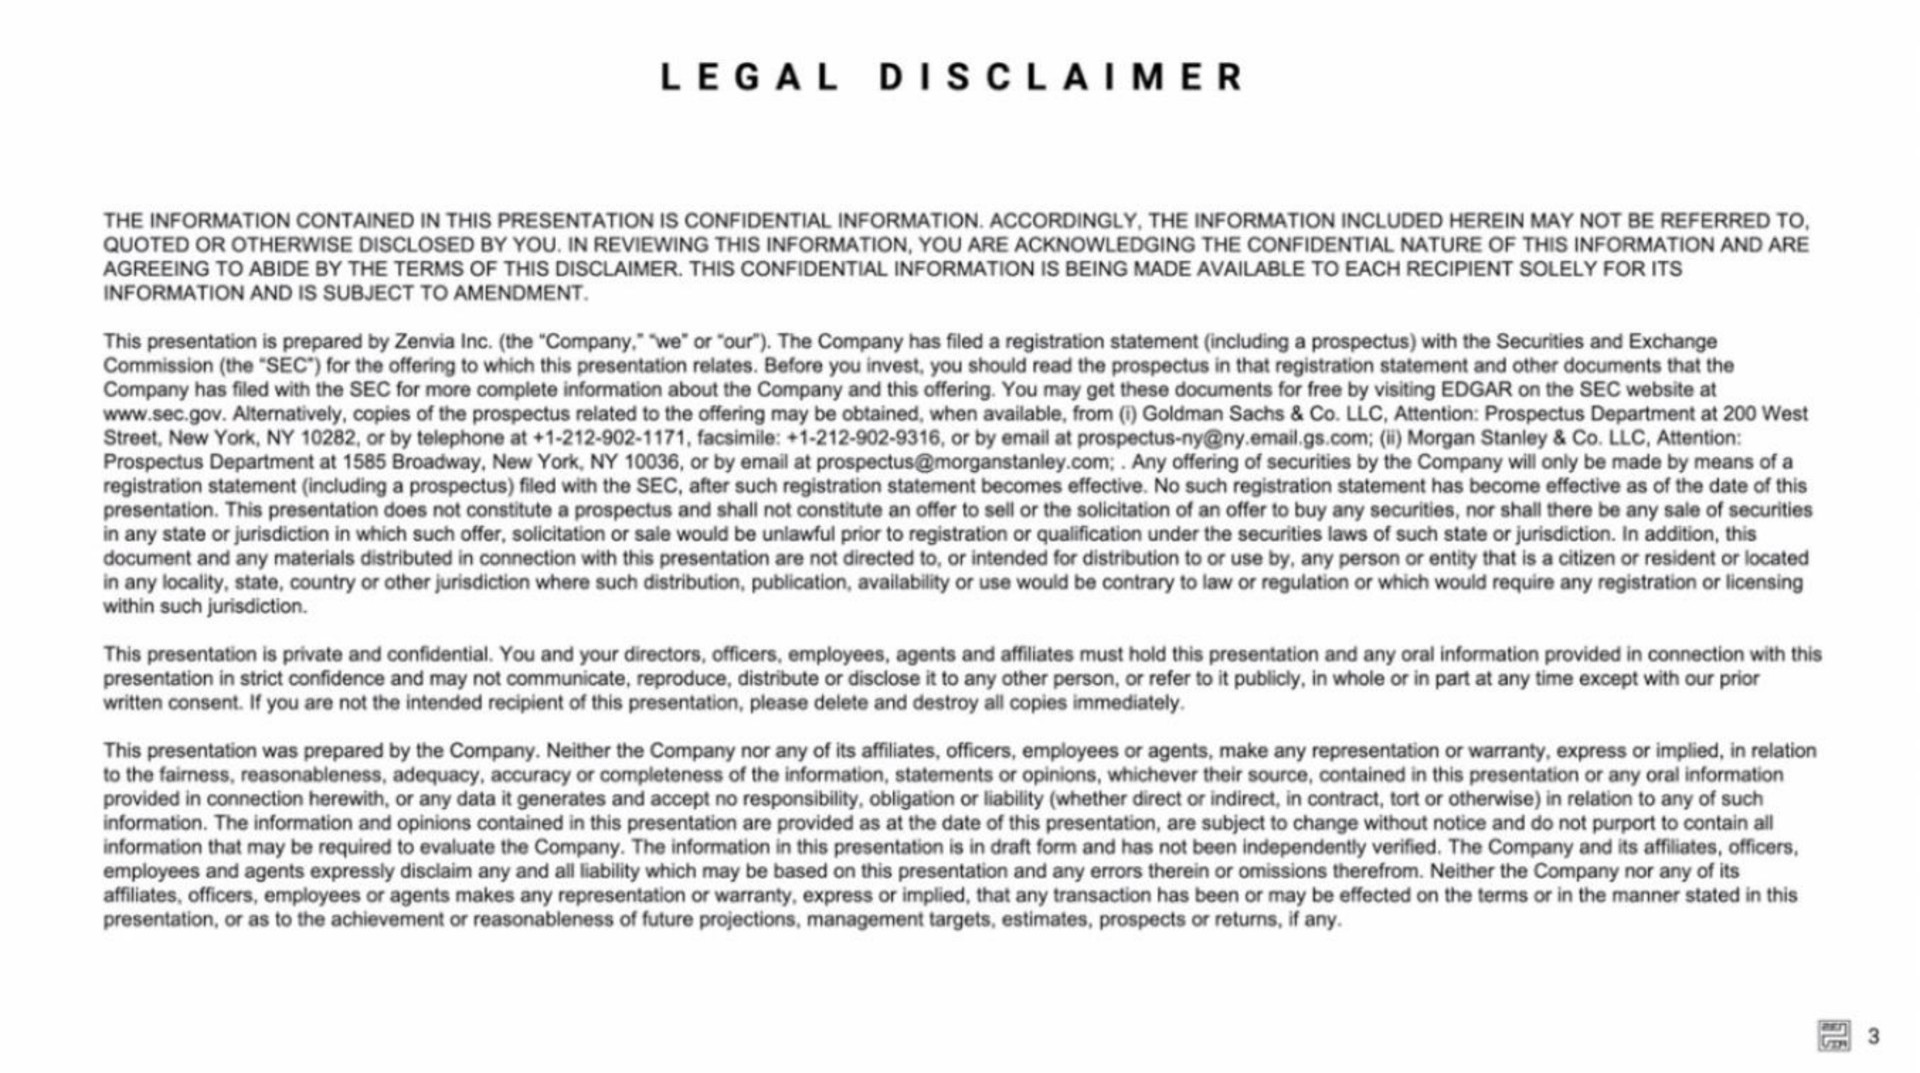 legal disclaimer | Zenvia